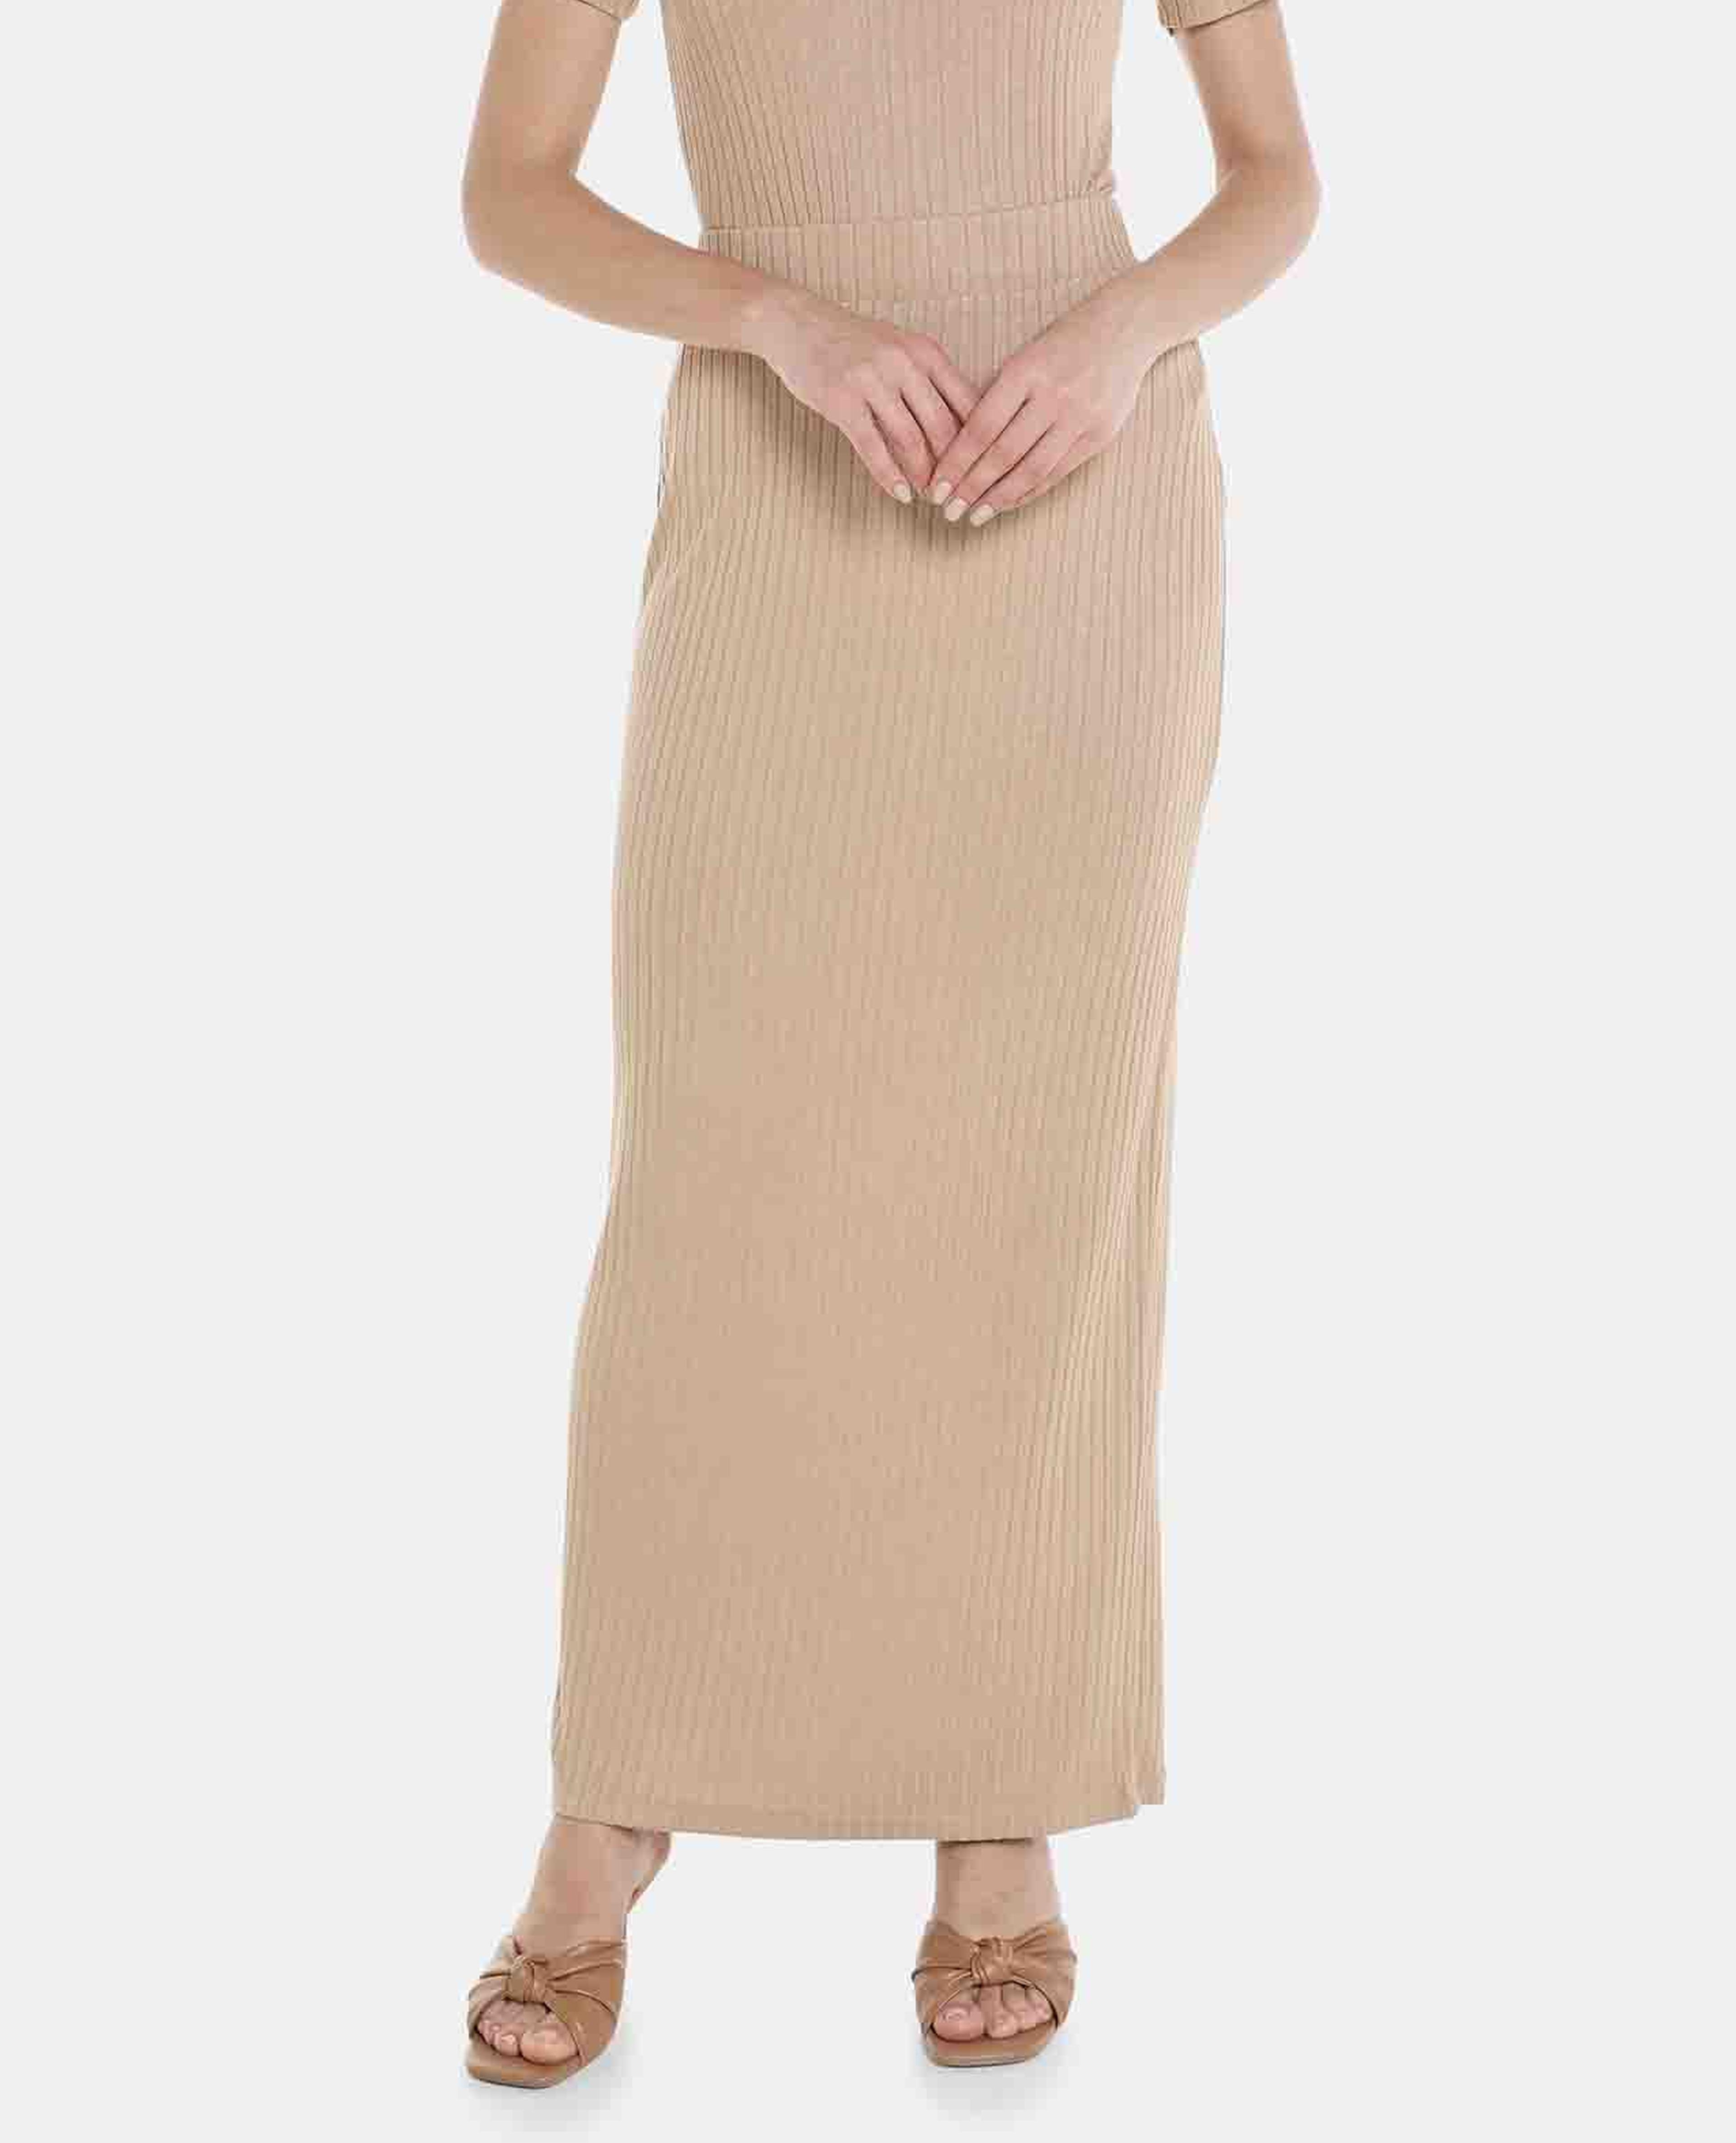 Beige Knit Solid Skirt